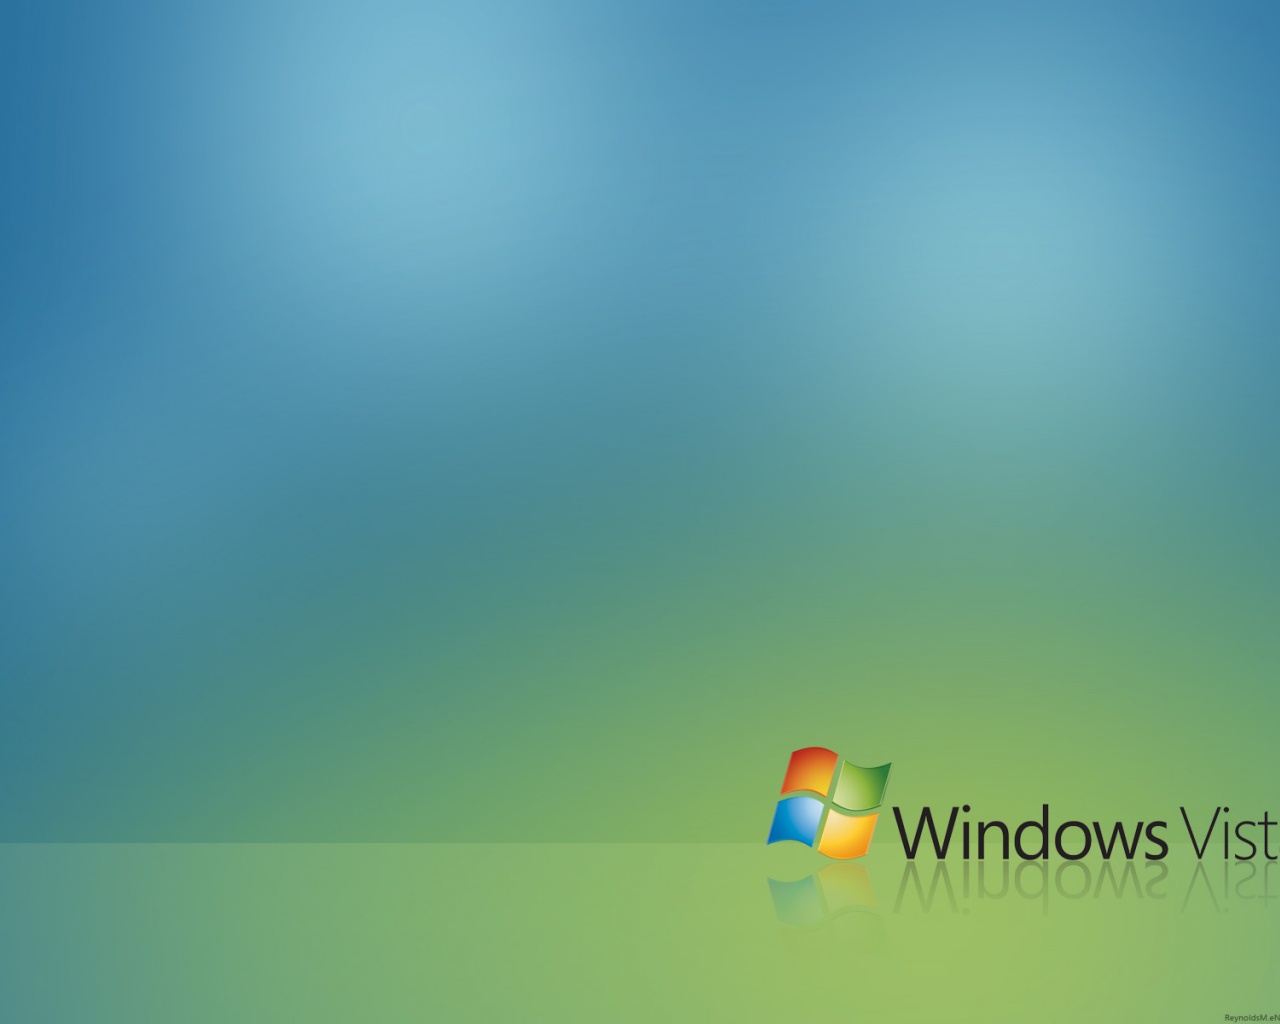 Windows Vista Desktop Pc And Mac Wallpaper